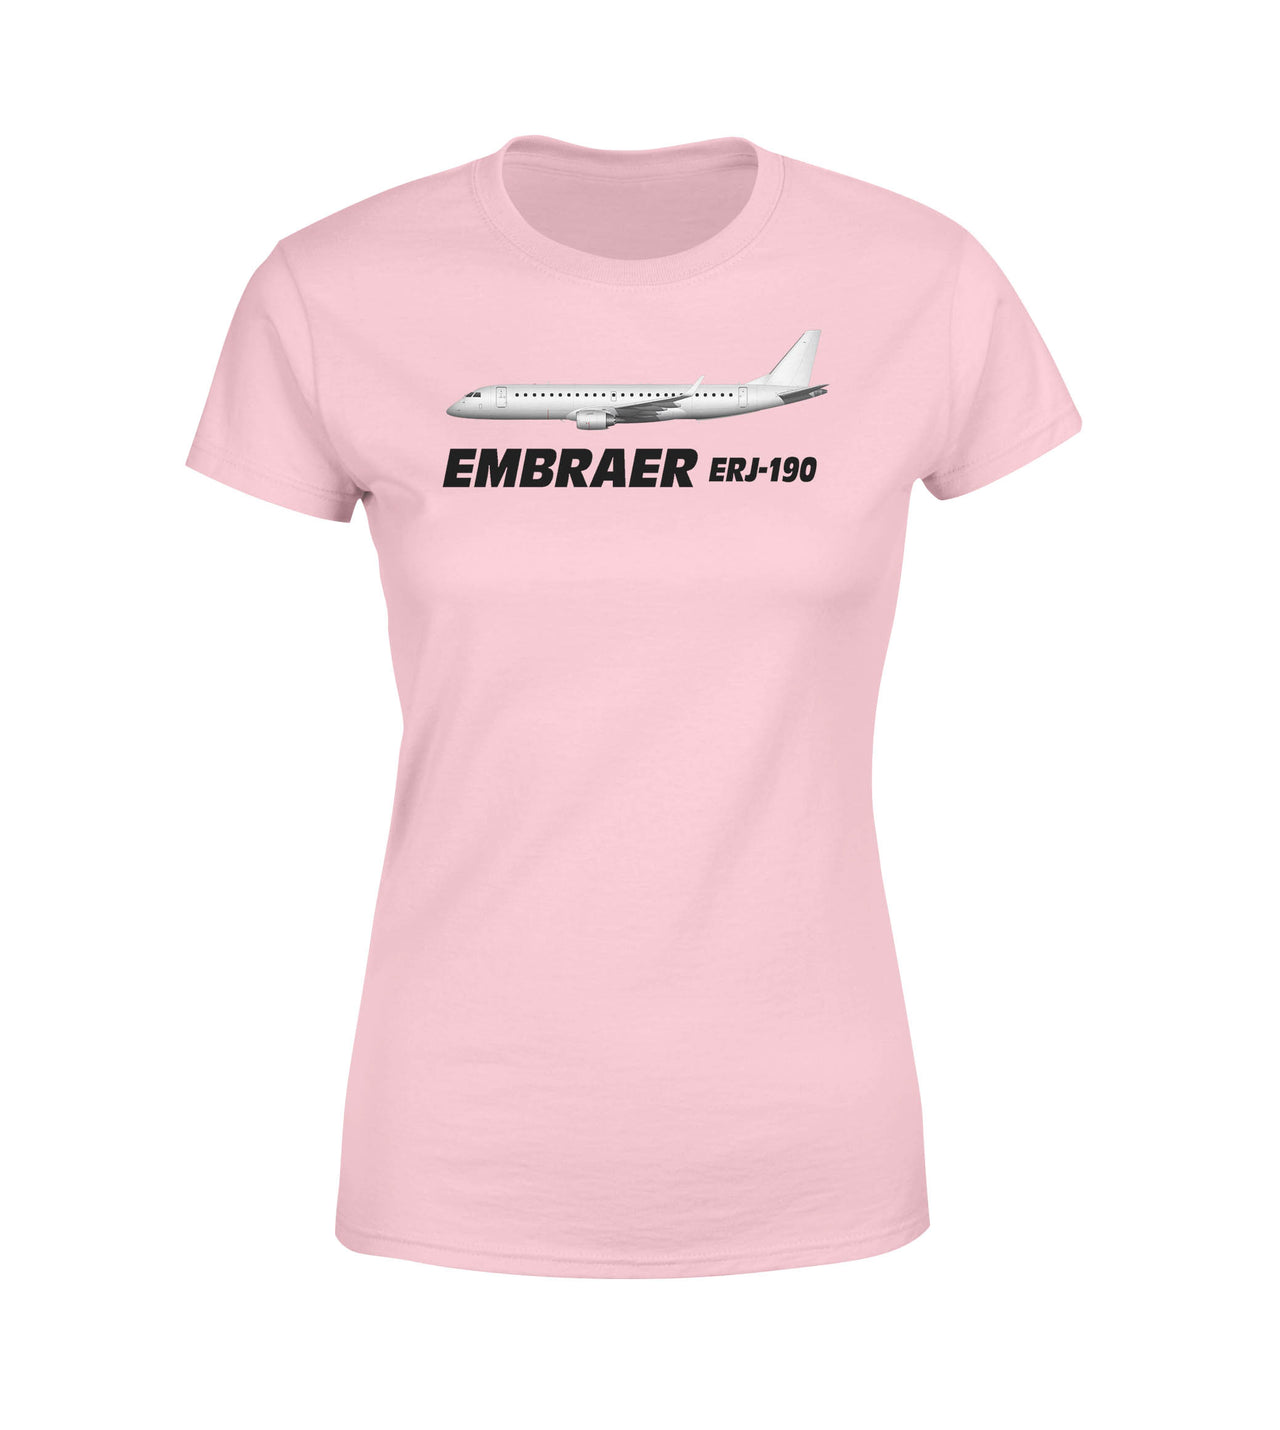 The Embraer ERJ-190 Designed Women T-Shirts